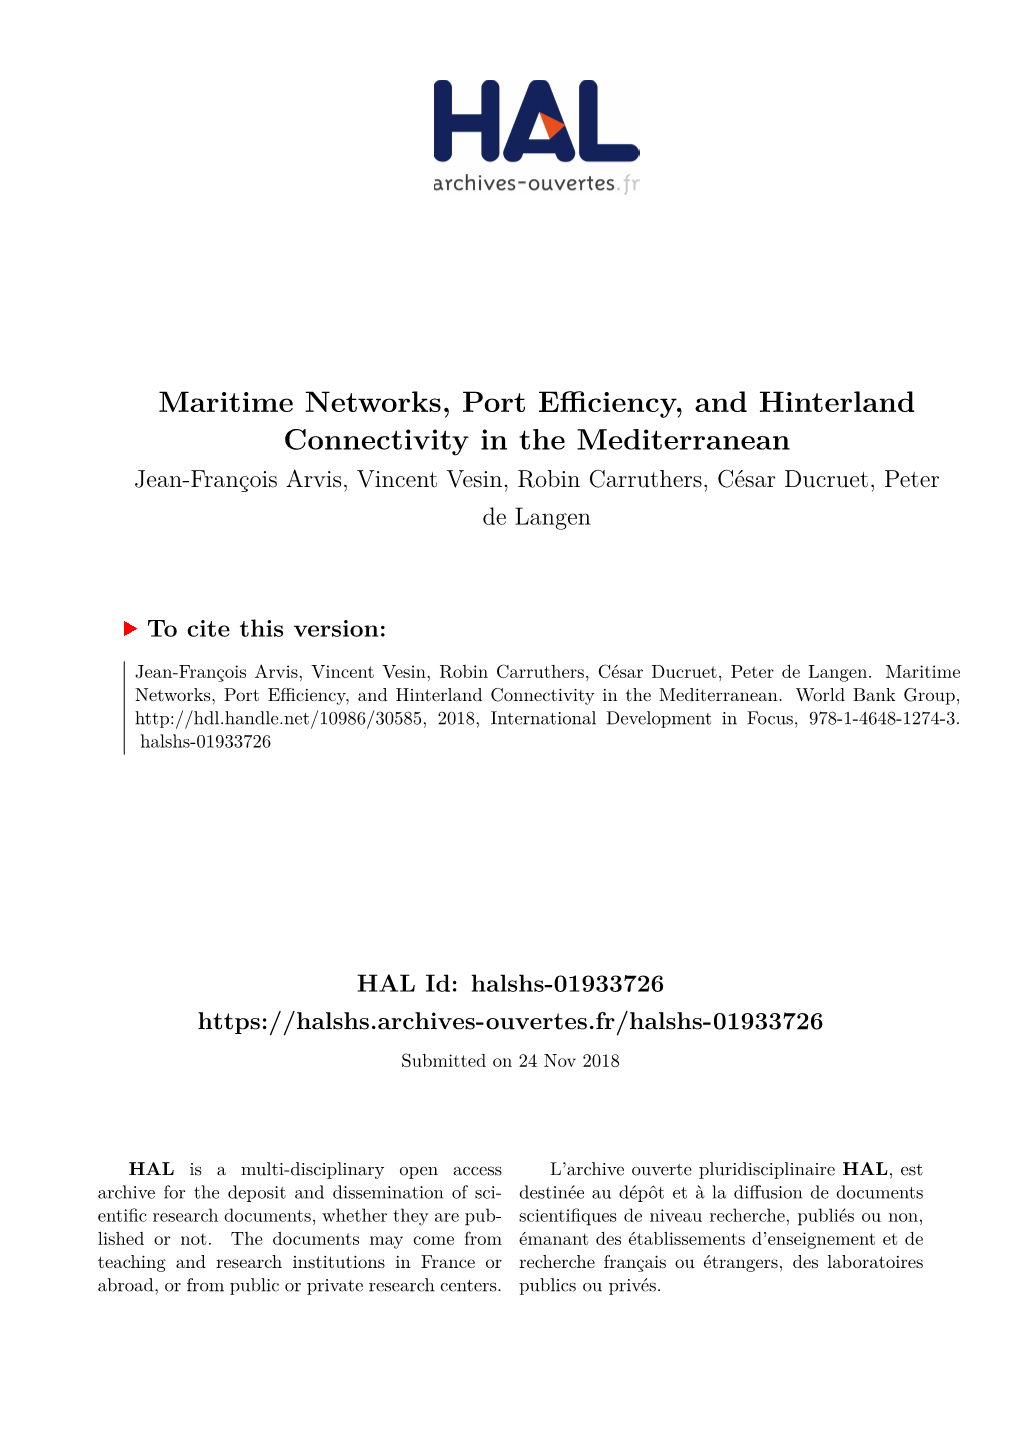 Maritime Networks, Port Efficiency, and Hinterland Connectivity in the Mediterranean Arvis, Vesin, Carruthers, Ducruet, and De Langen